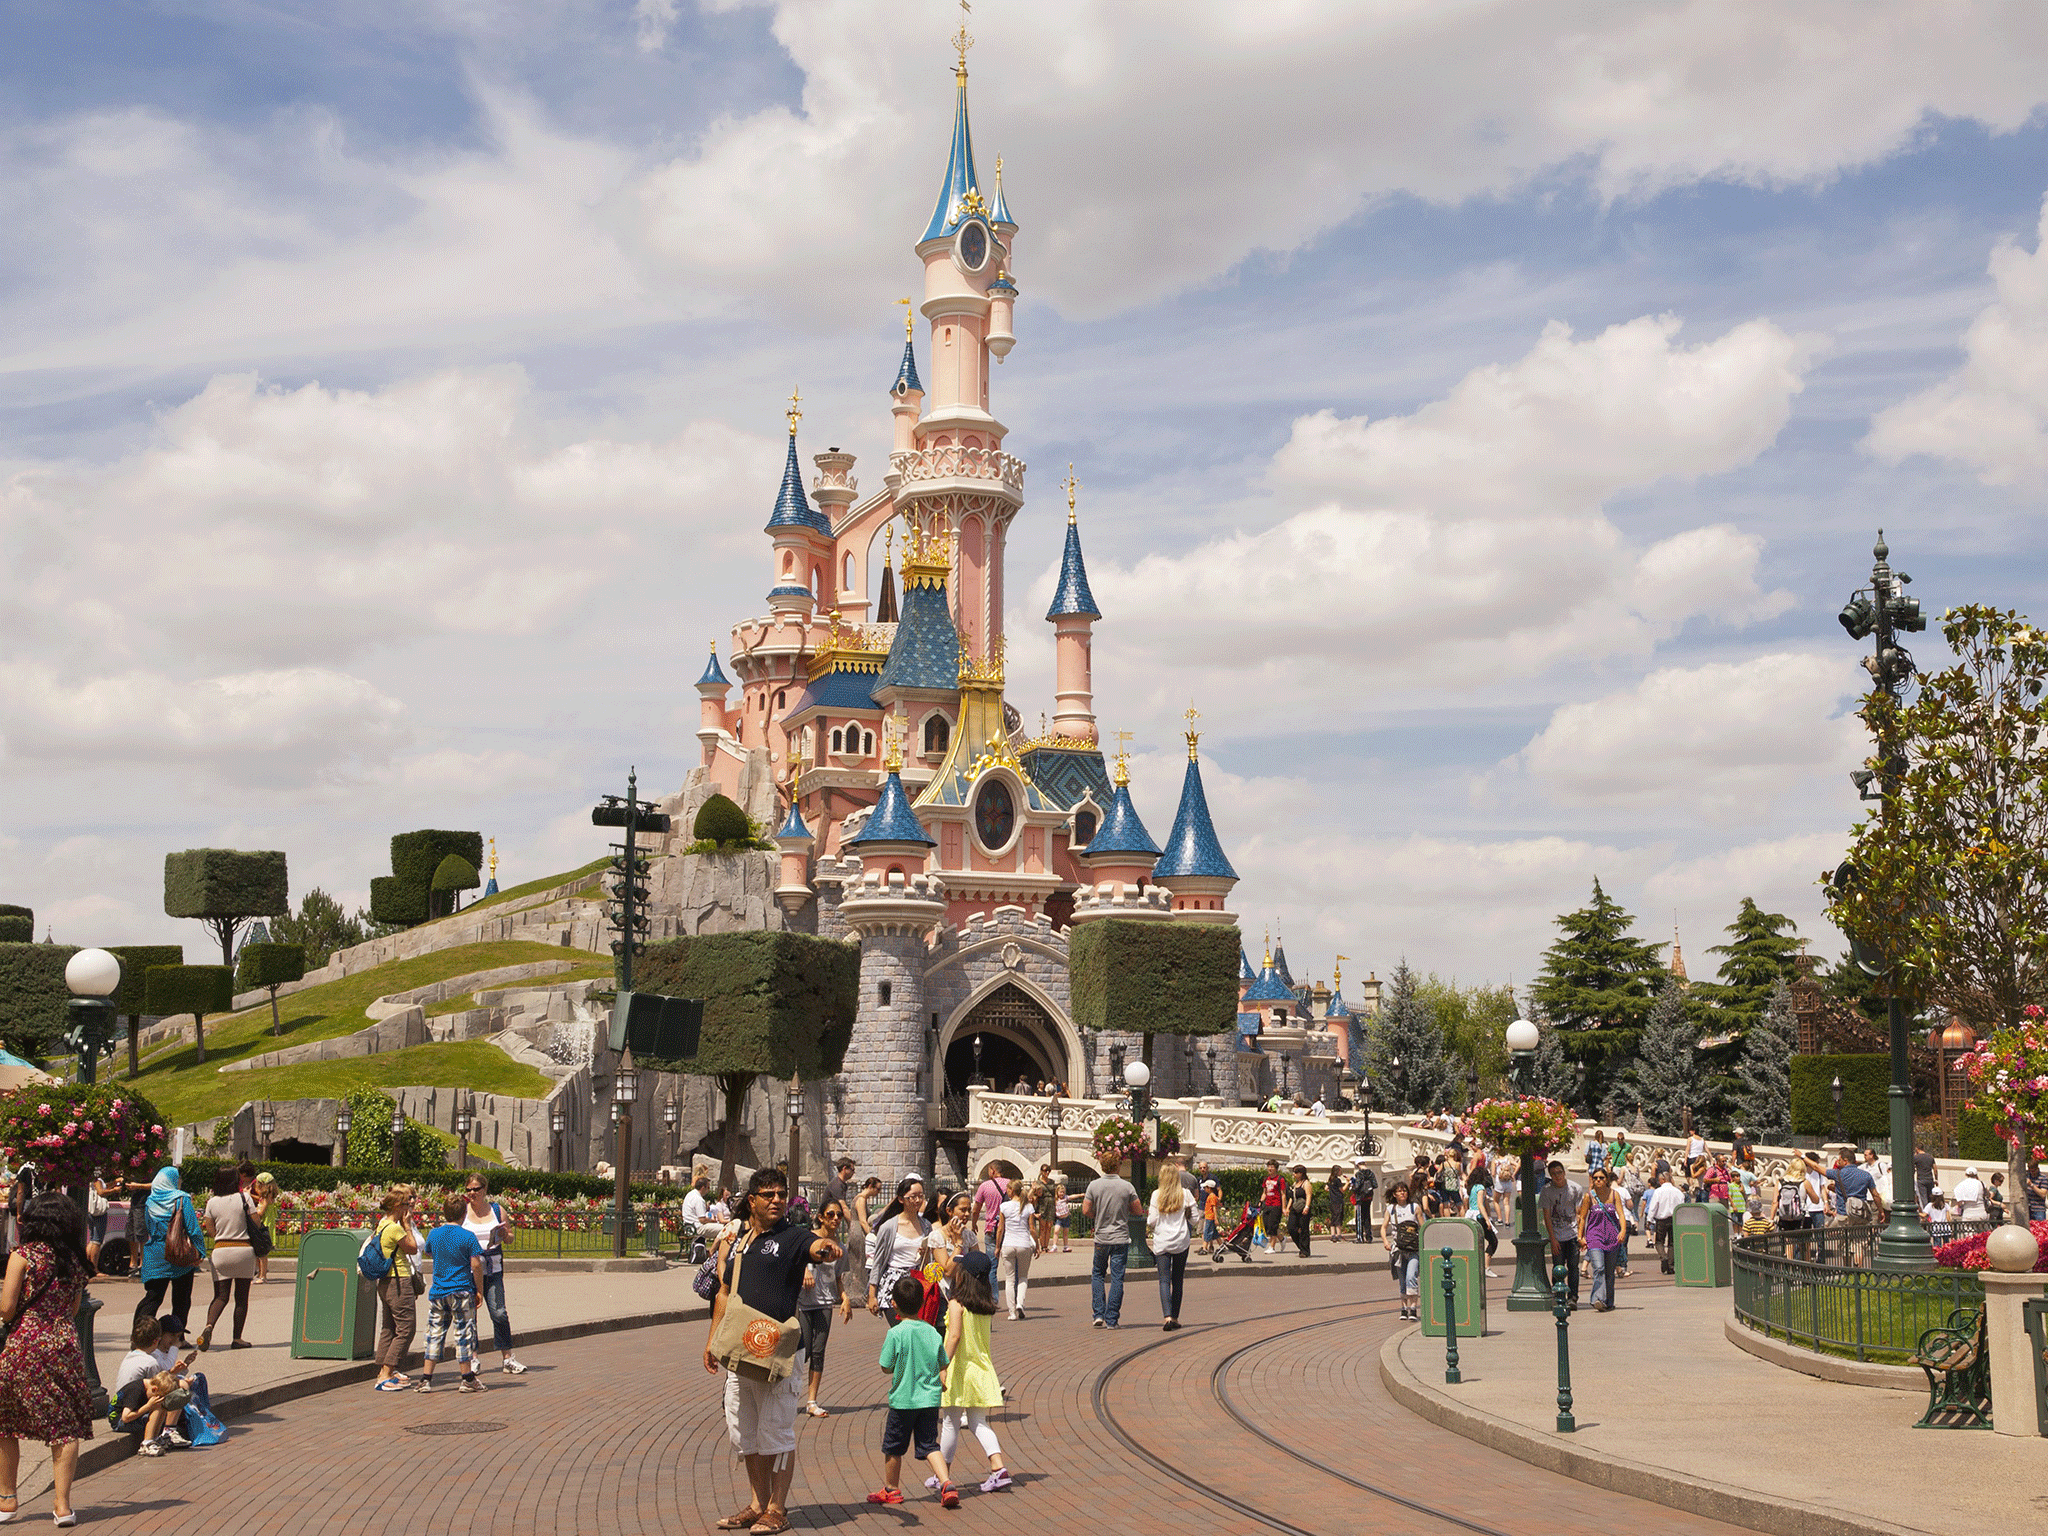 Disneyland Paris technician found dead inside haunted house ...